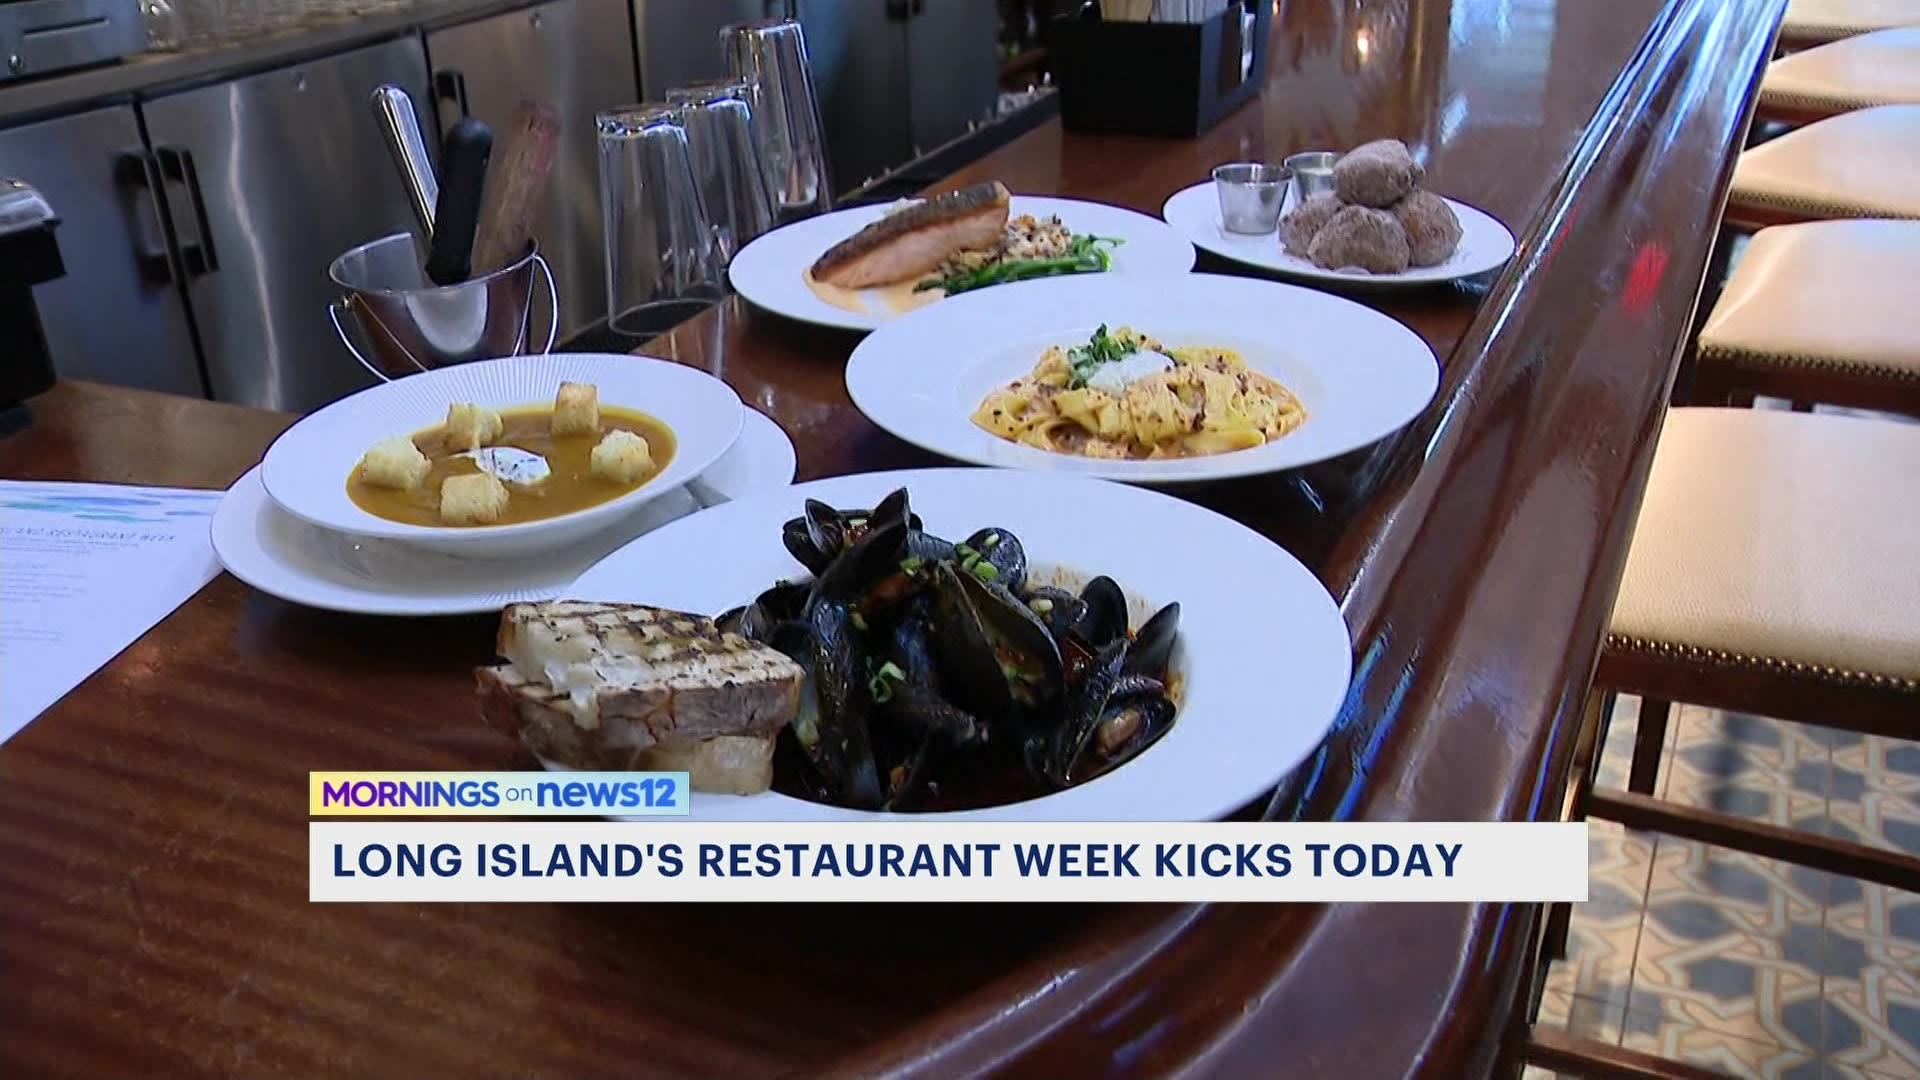 Long Island’s Winter Restaurant Week kicks off